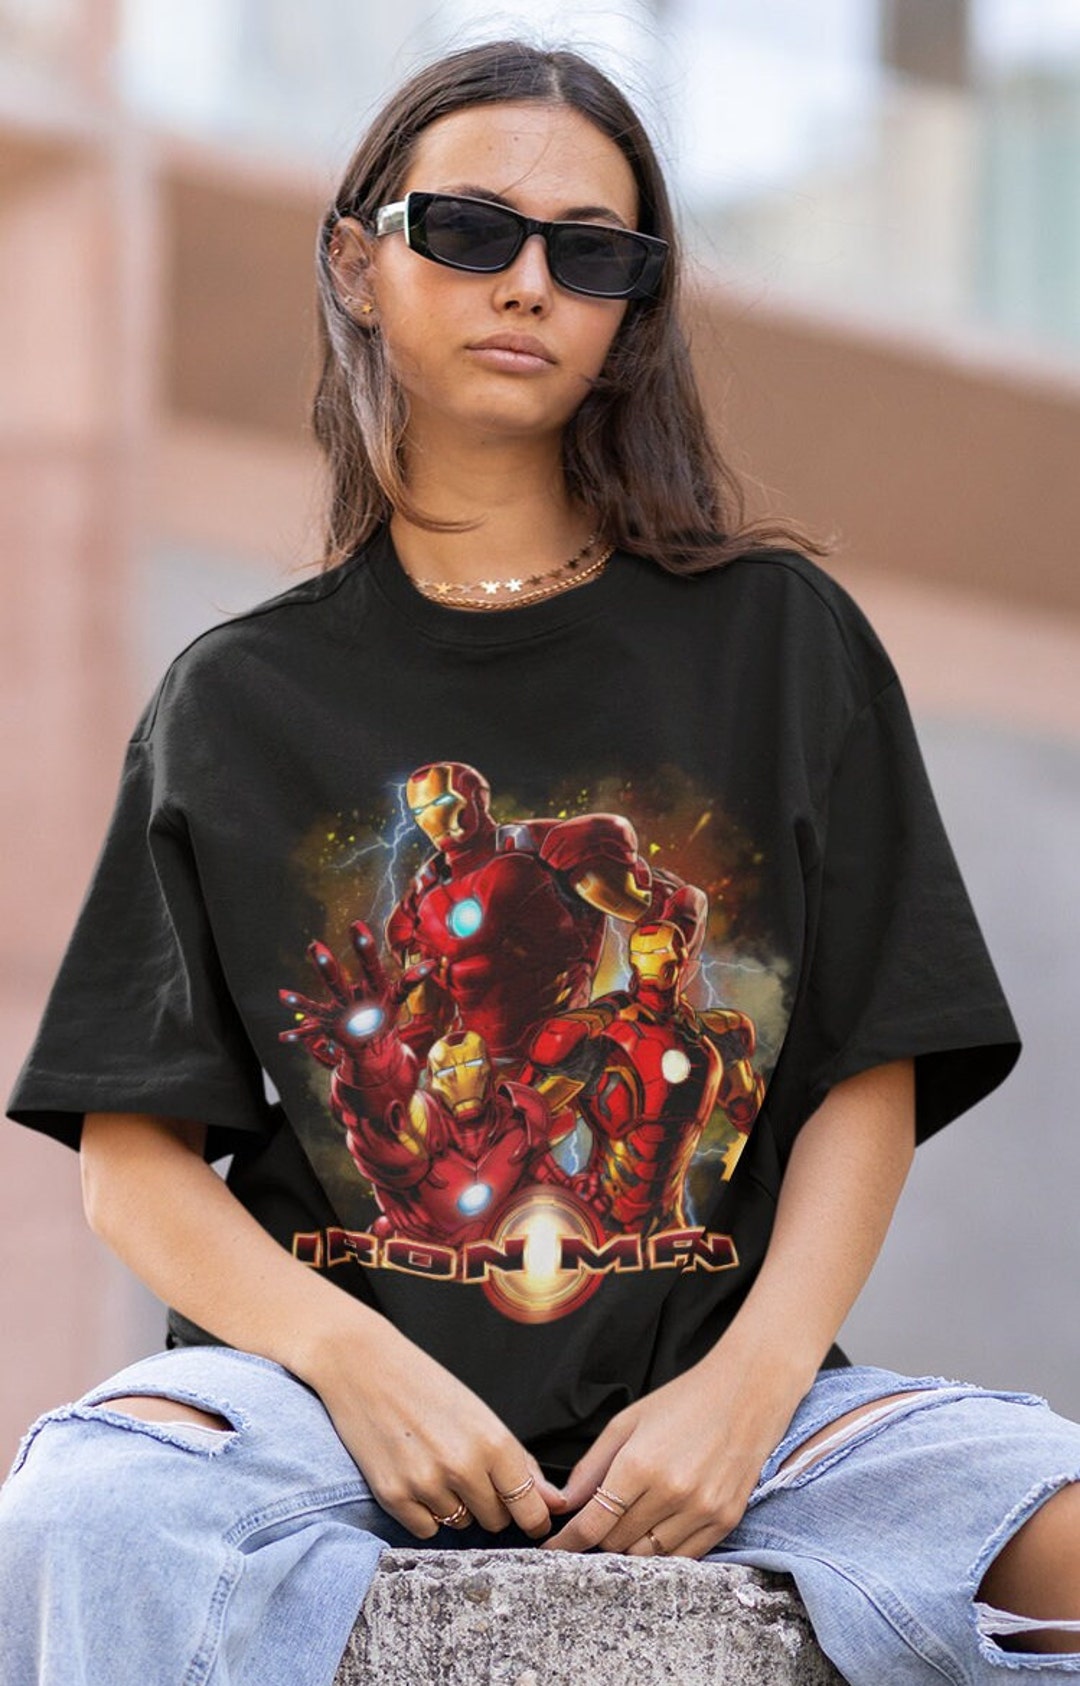 IRON MAN / Iron Man camiseta / Iron Man Cartoon Avengers Shirt / Iron ...